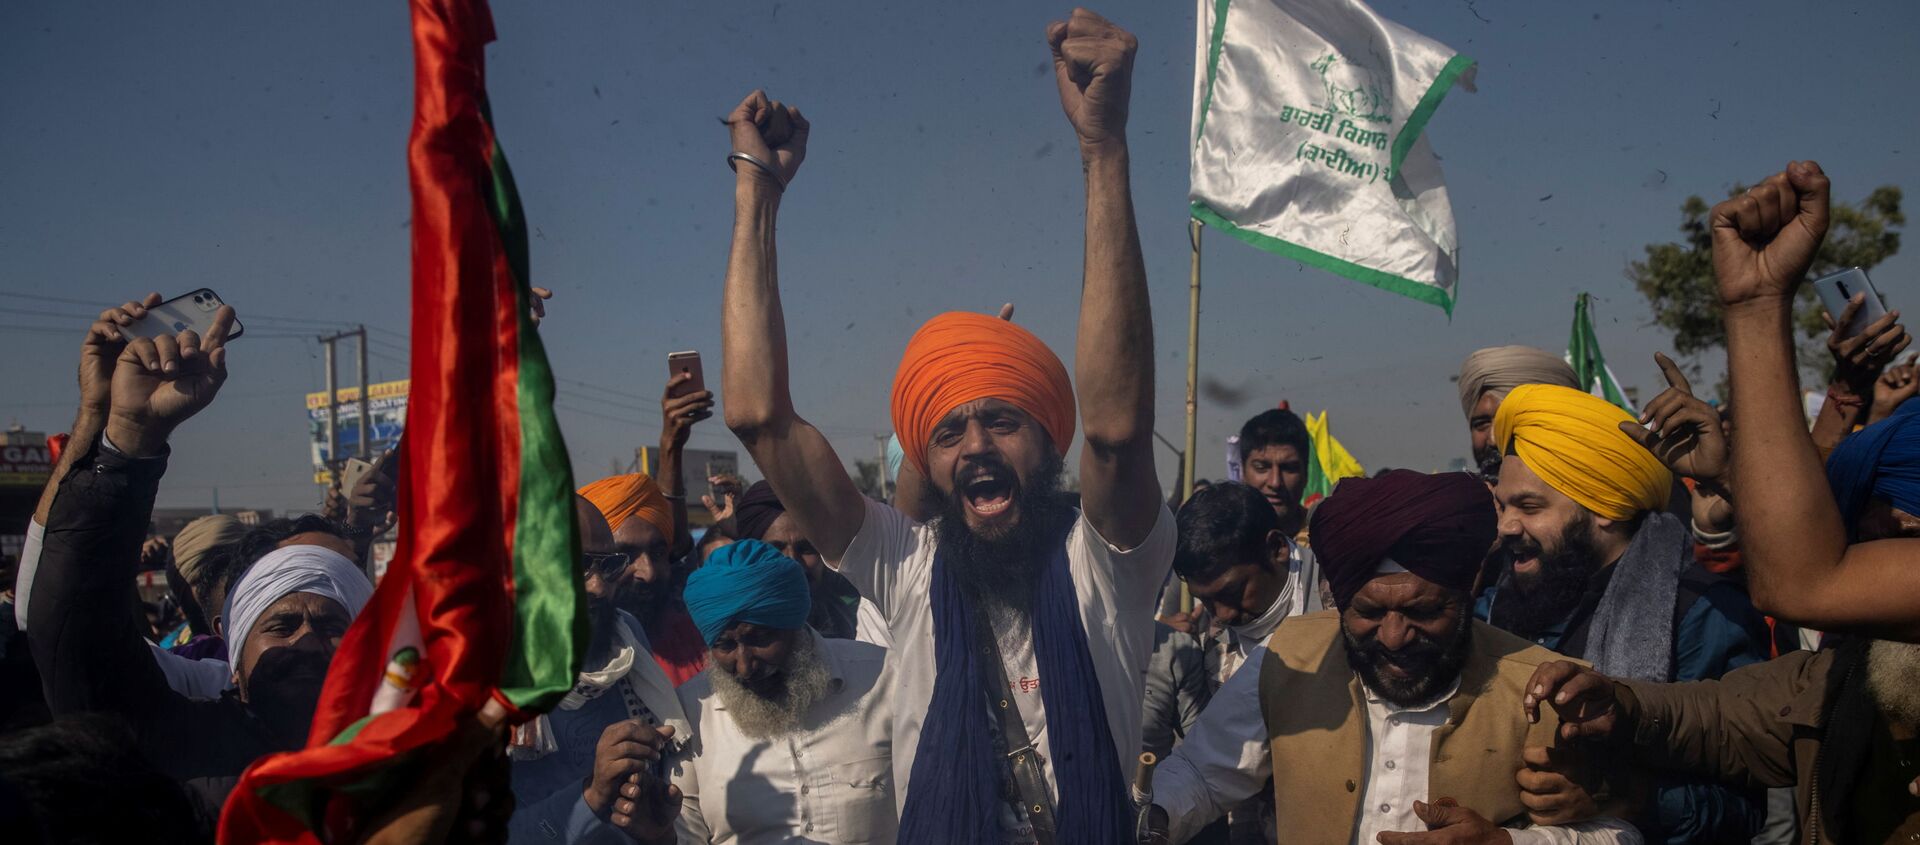 Farmers shout slogans after burning an effigy during a protest against the newly passed farm bills at Singhu border near Delhi, India, November 28, 2020 - Sputnik International, 1920, 30.11.2020